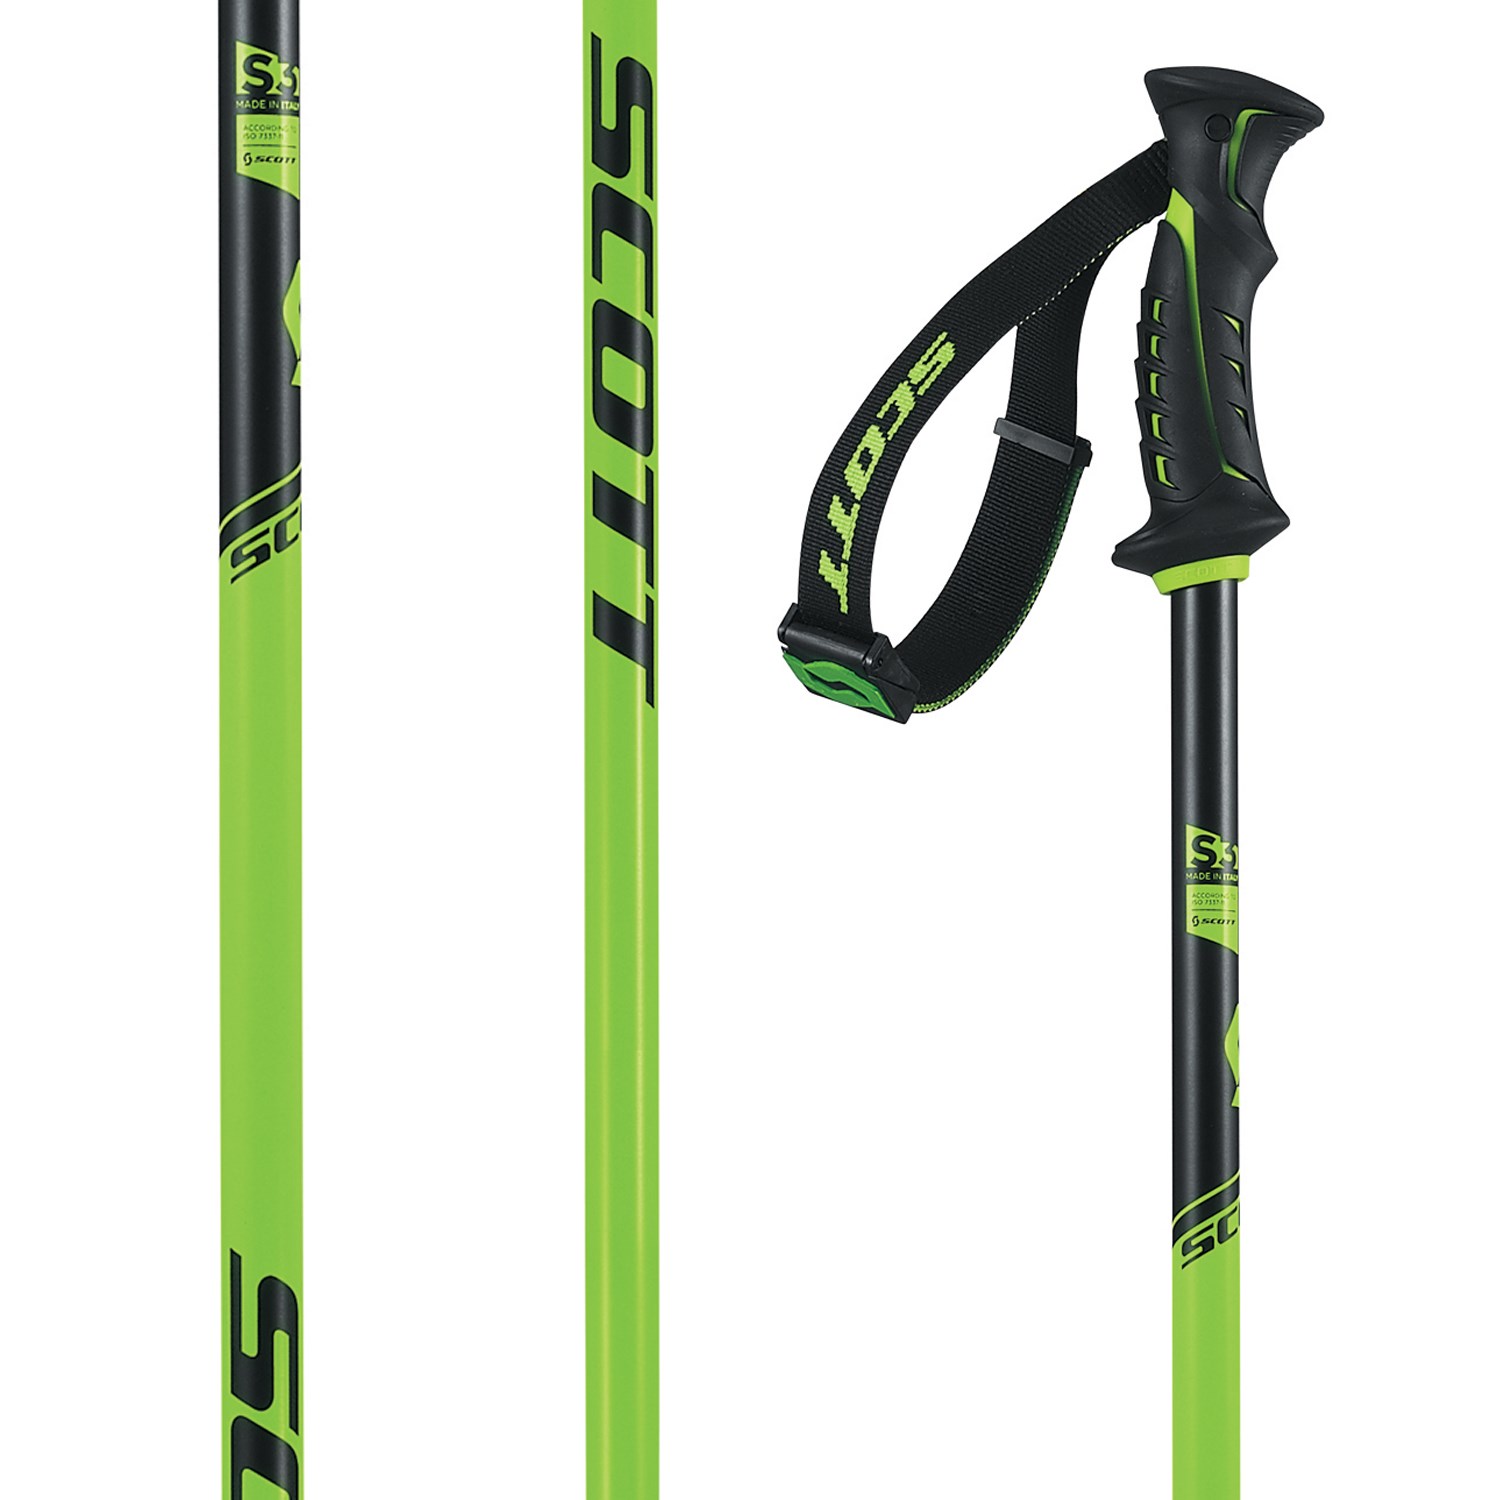 Scott 720 Ski Poles 2016 Evo regarding how to 720 ski for Invigorate